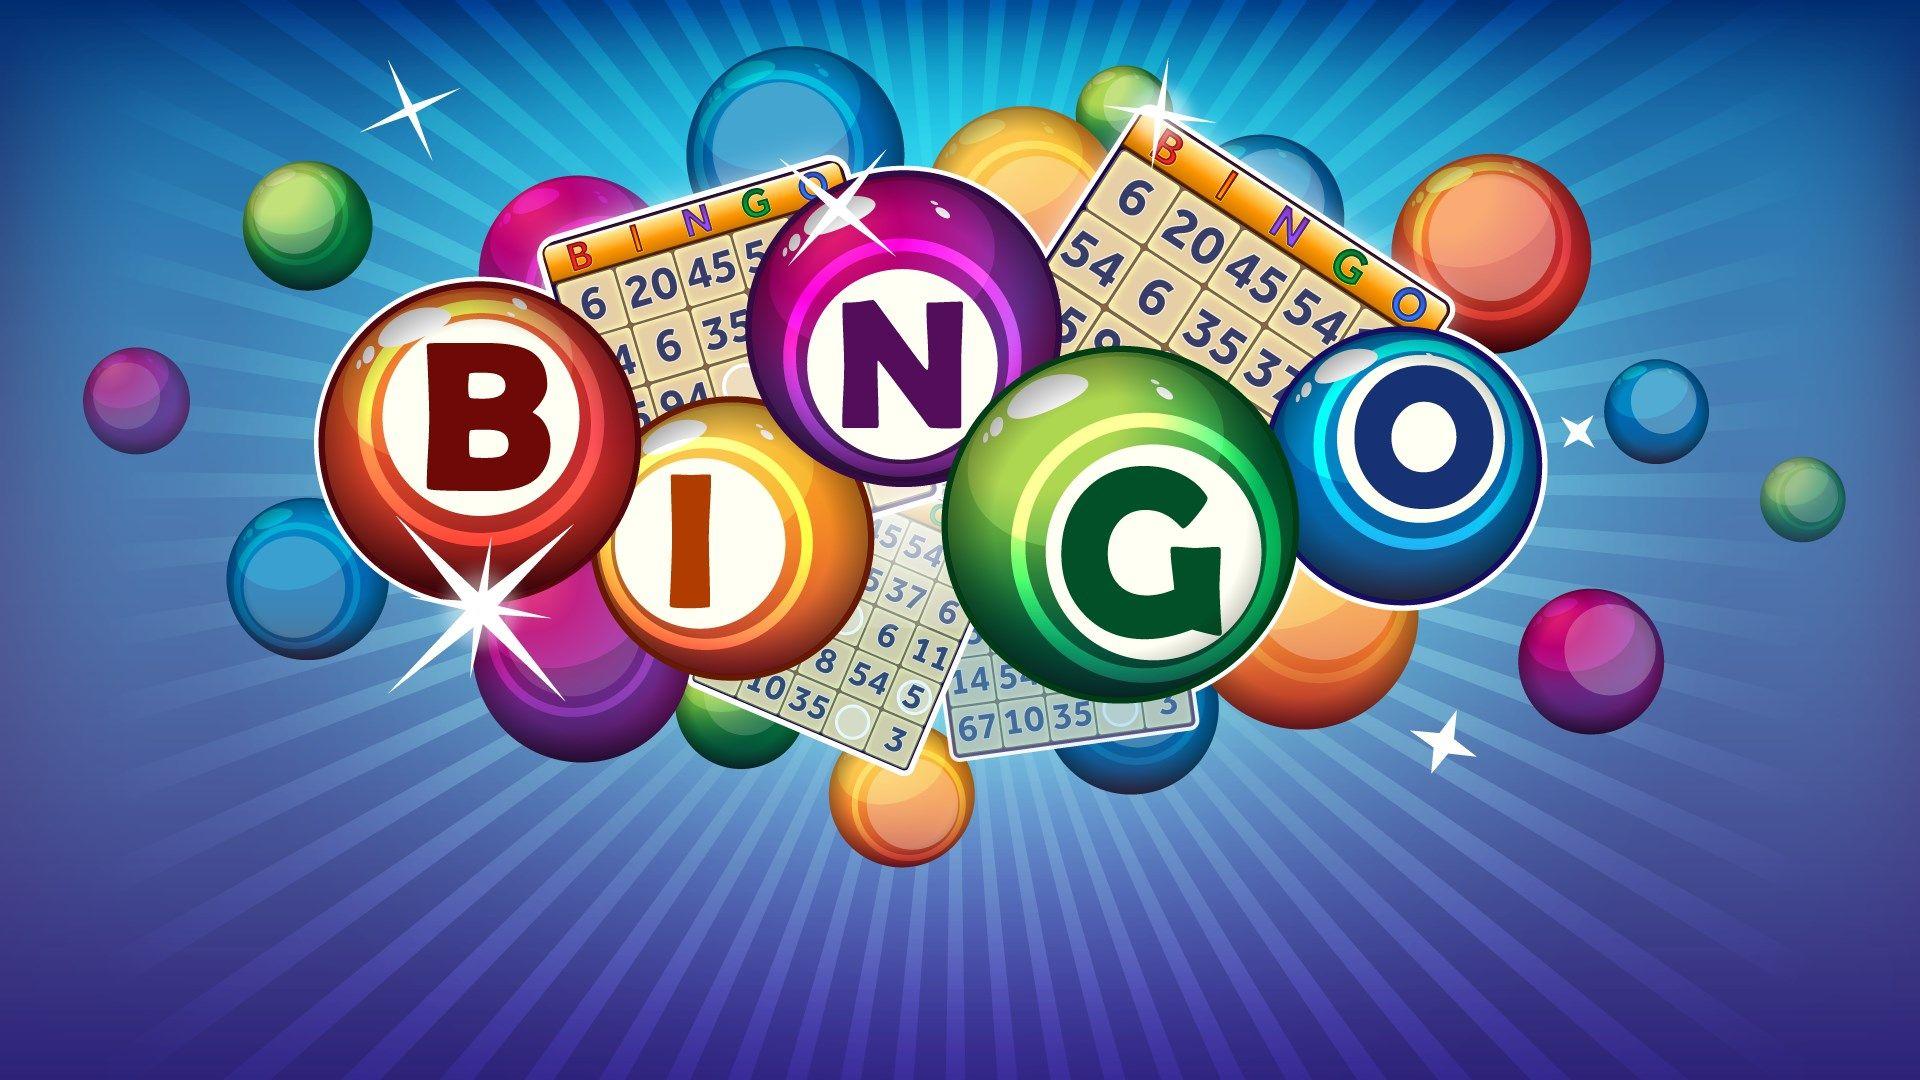 Bingo Game Wallpapers - Top Free Bingo Game Backgrounds - WallpaperAccess